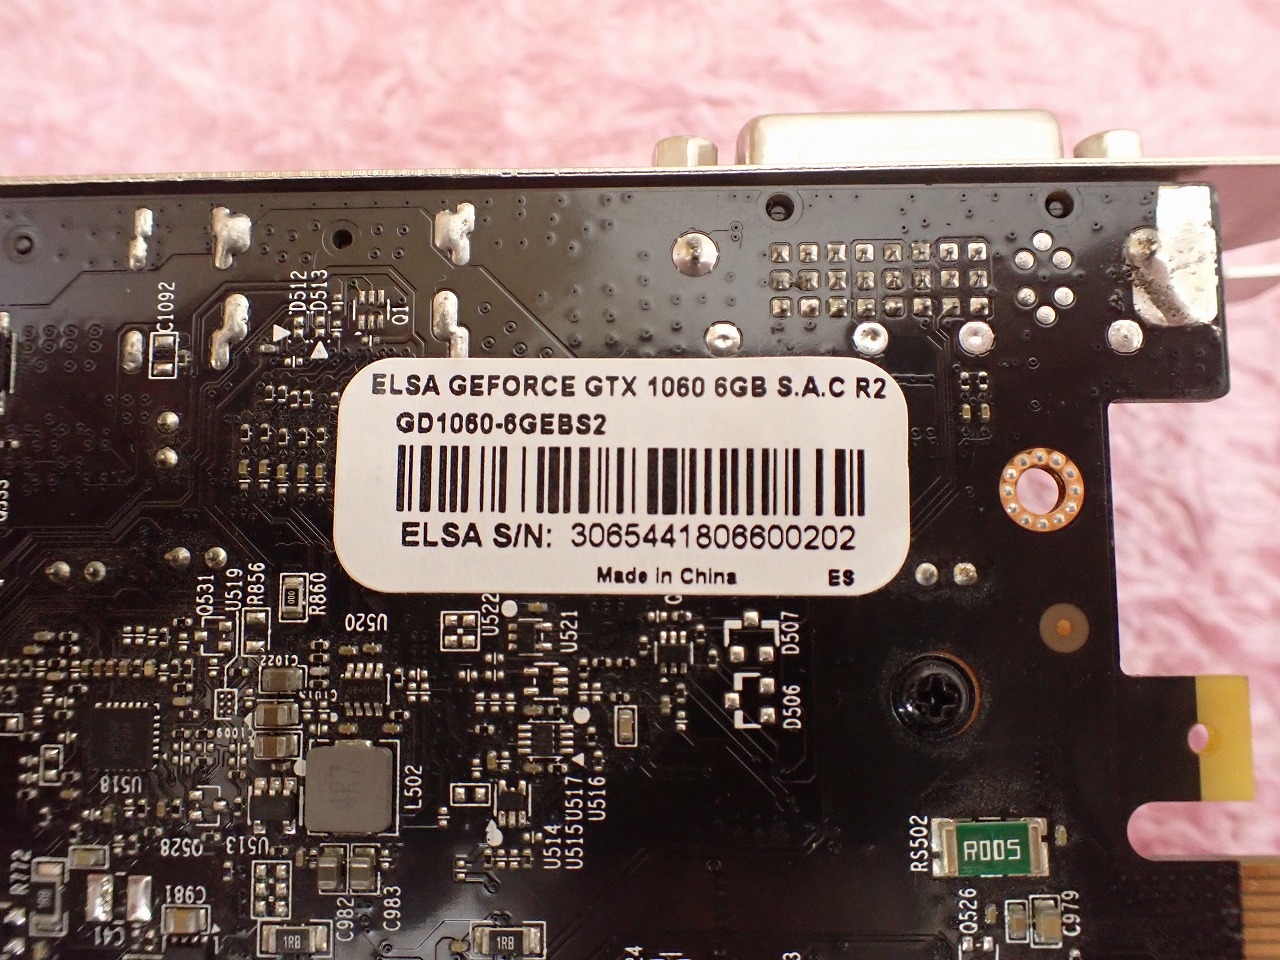 GEFORCE GTX1060 6GB S.A.C R2